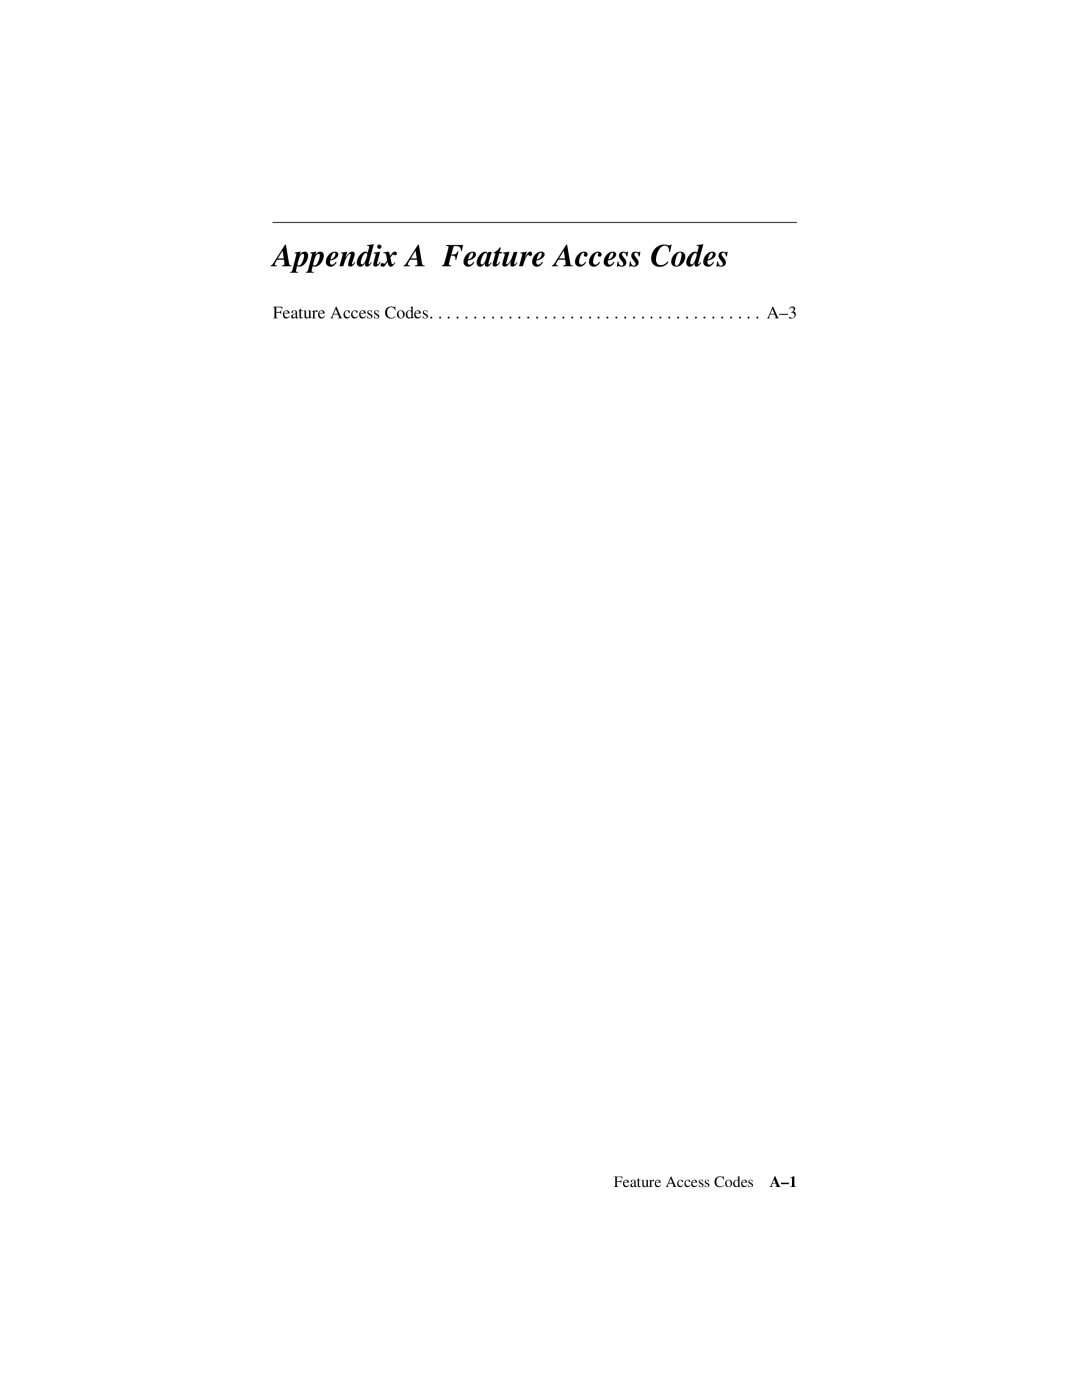 Siemens 600 Series, 300 Series manual Appendix A Feature Access Codes, Feature Access Codes A-1 